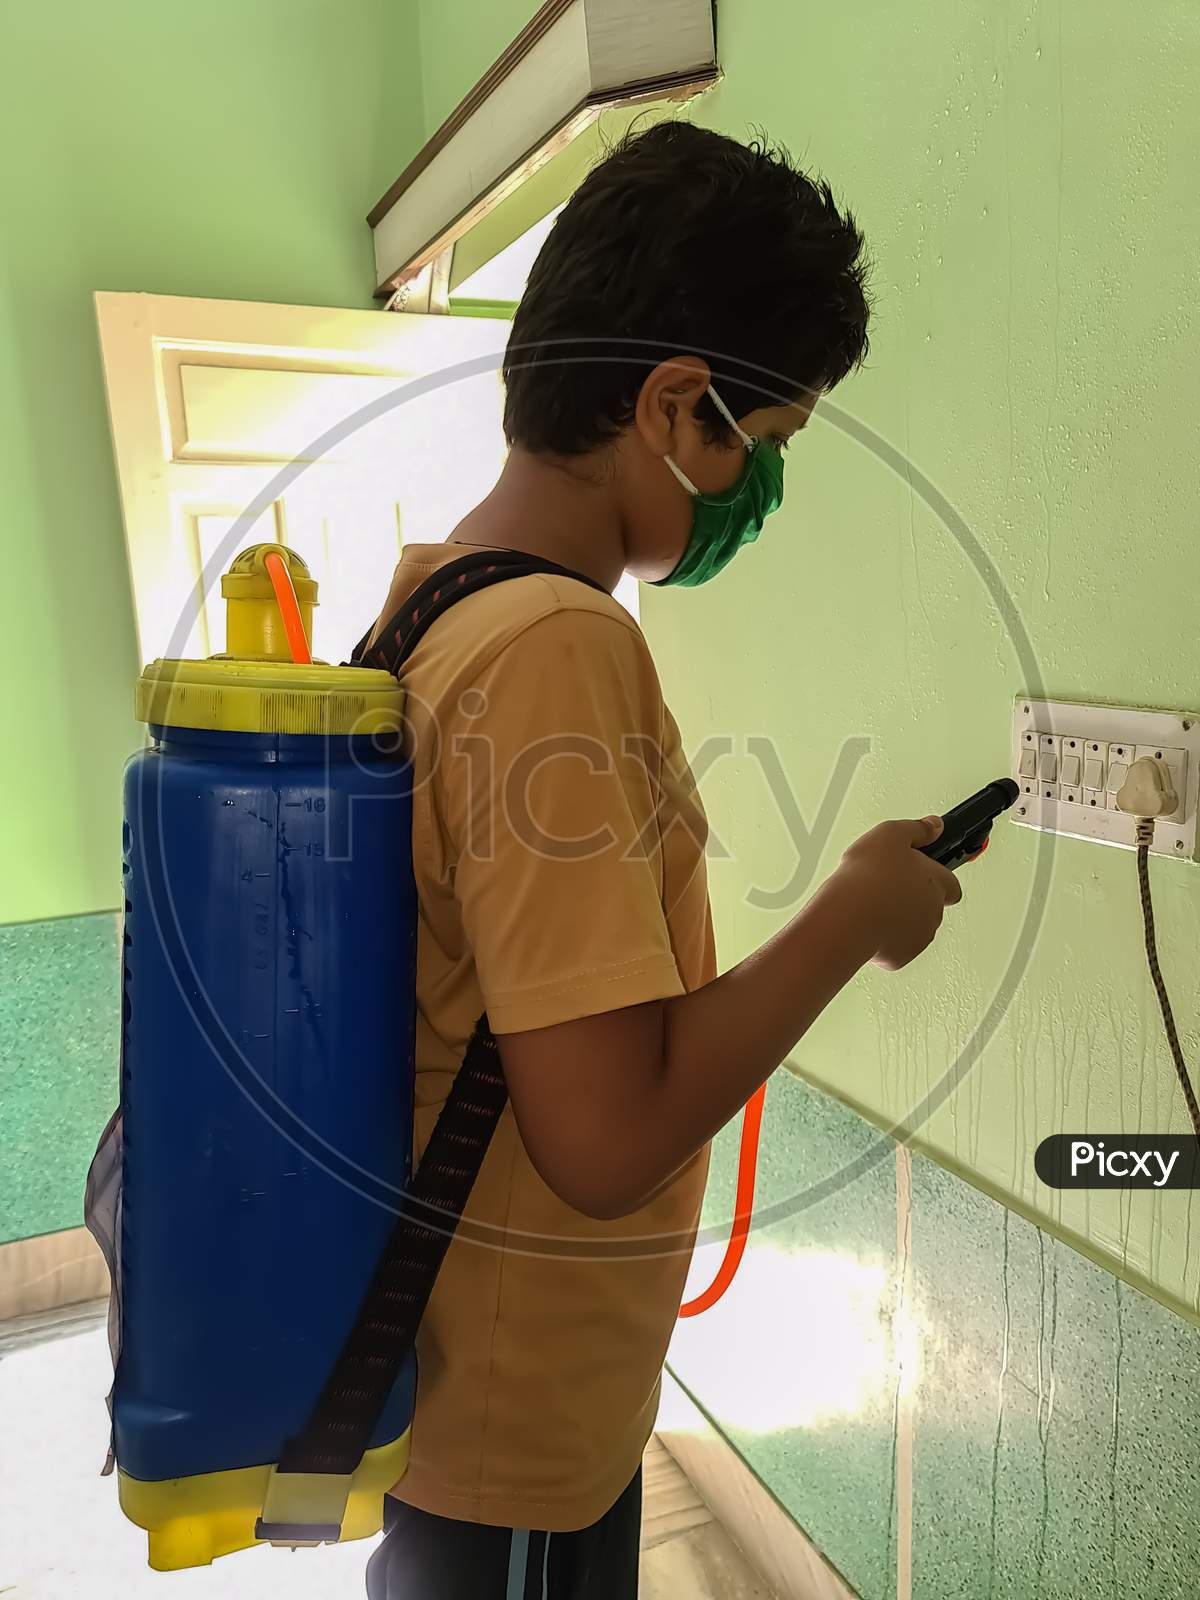 A boy with sanitizer